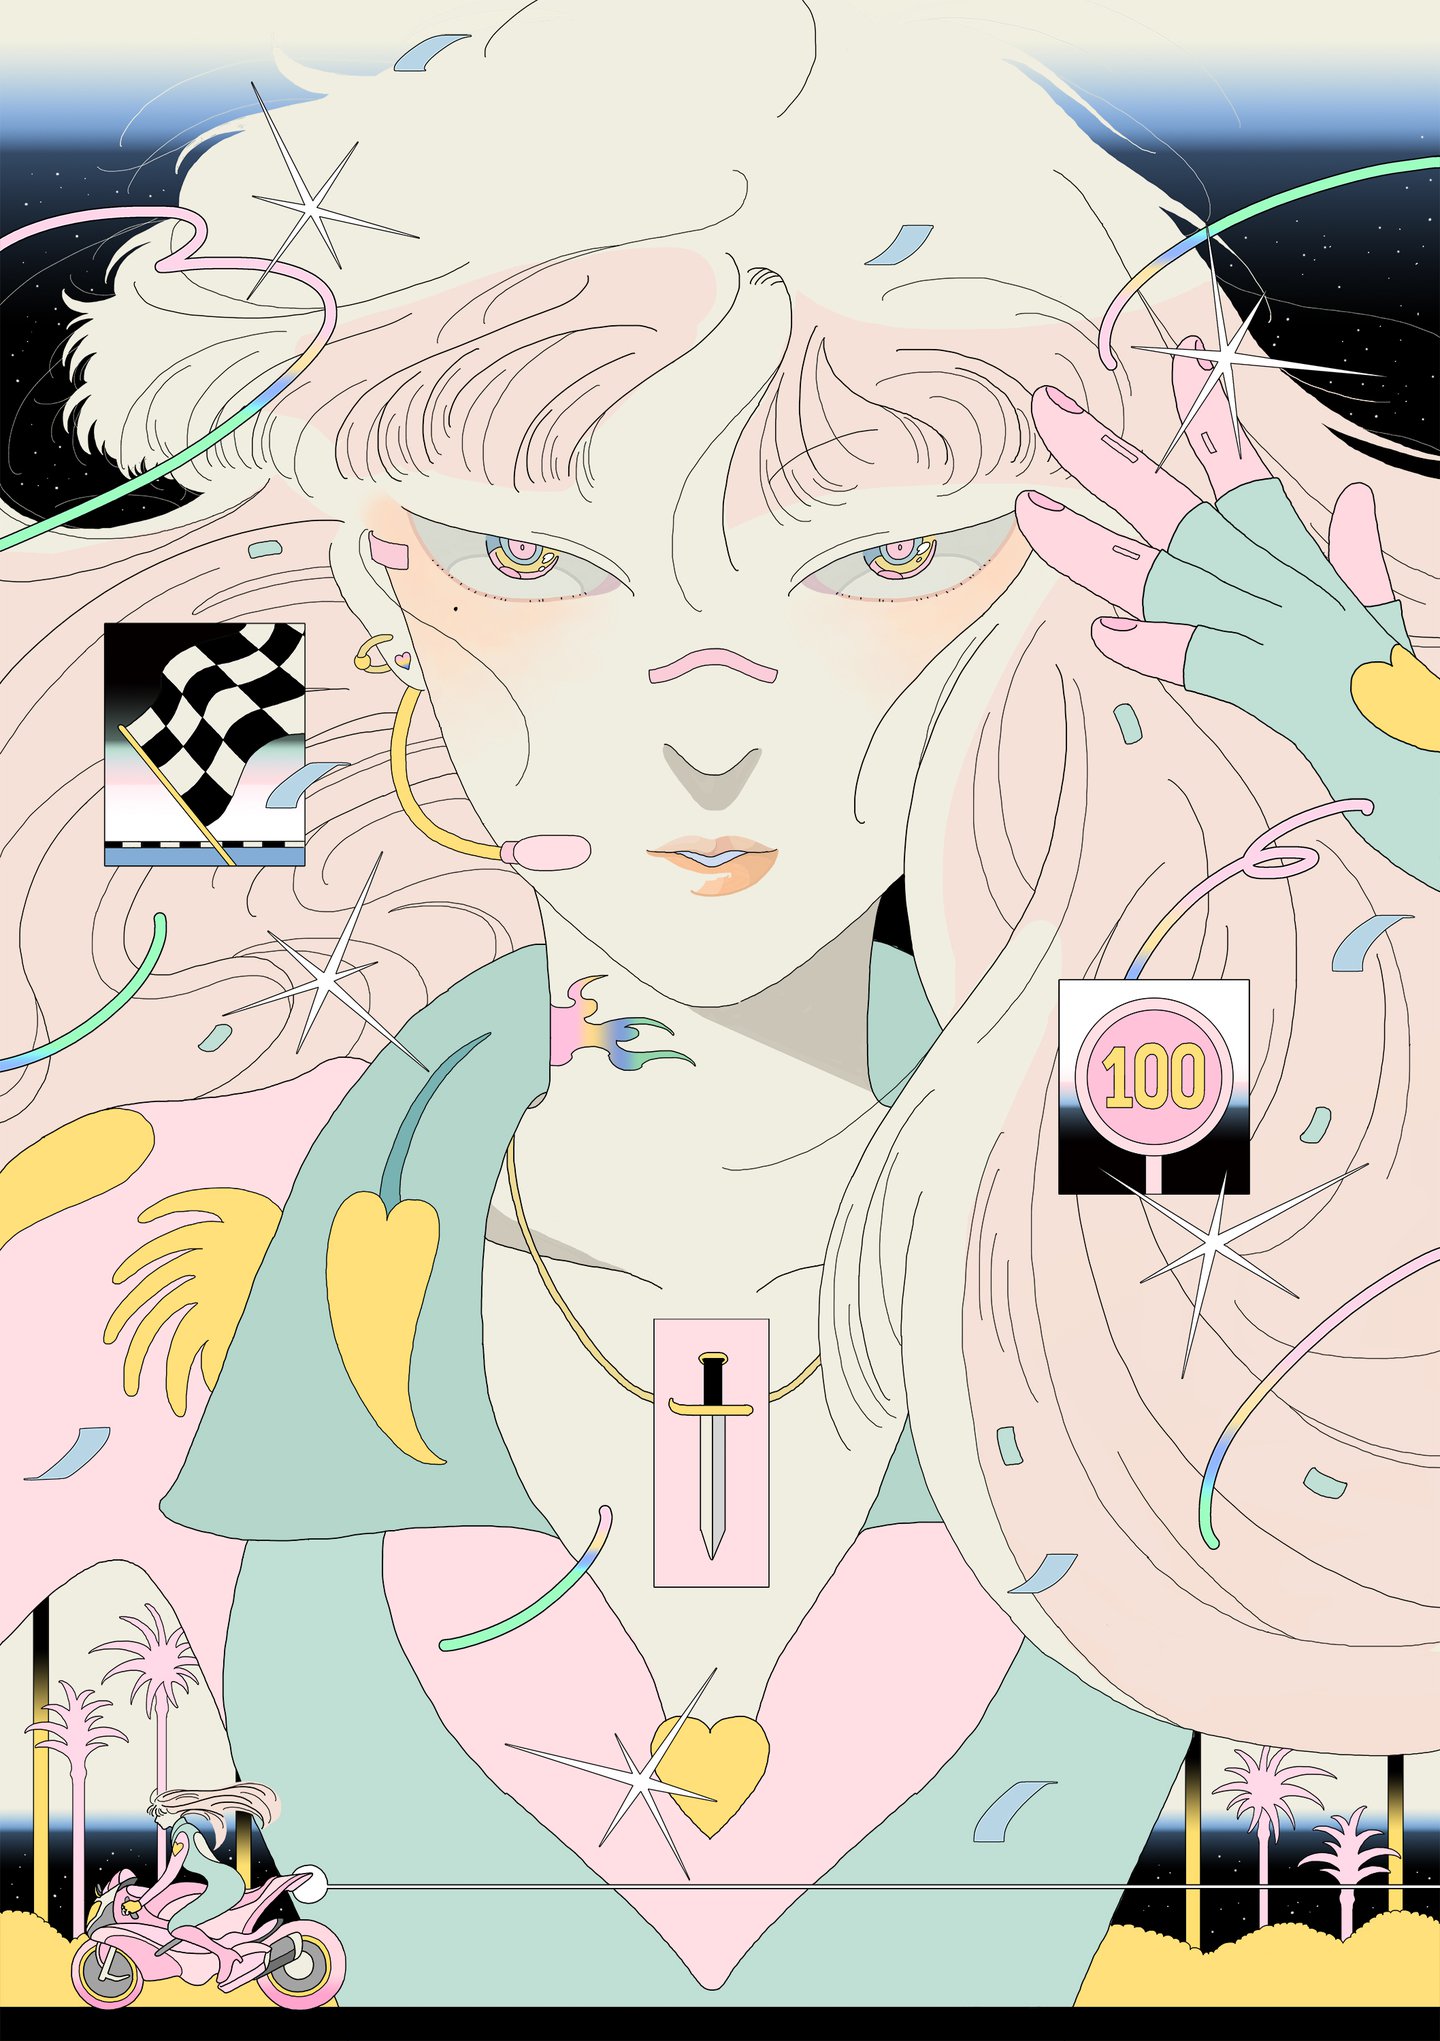 Anime, graphic design and multiple narratives collide in Taipei-based  illustrator Saitemiss' work